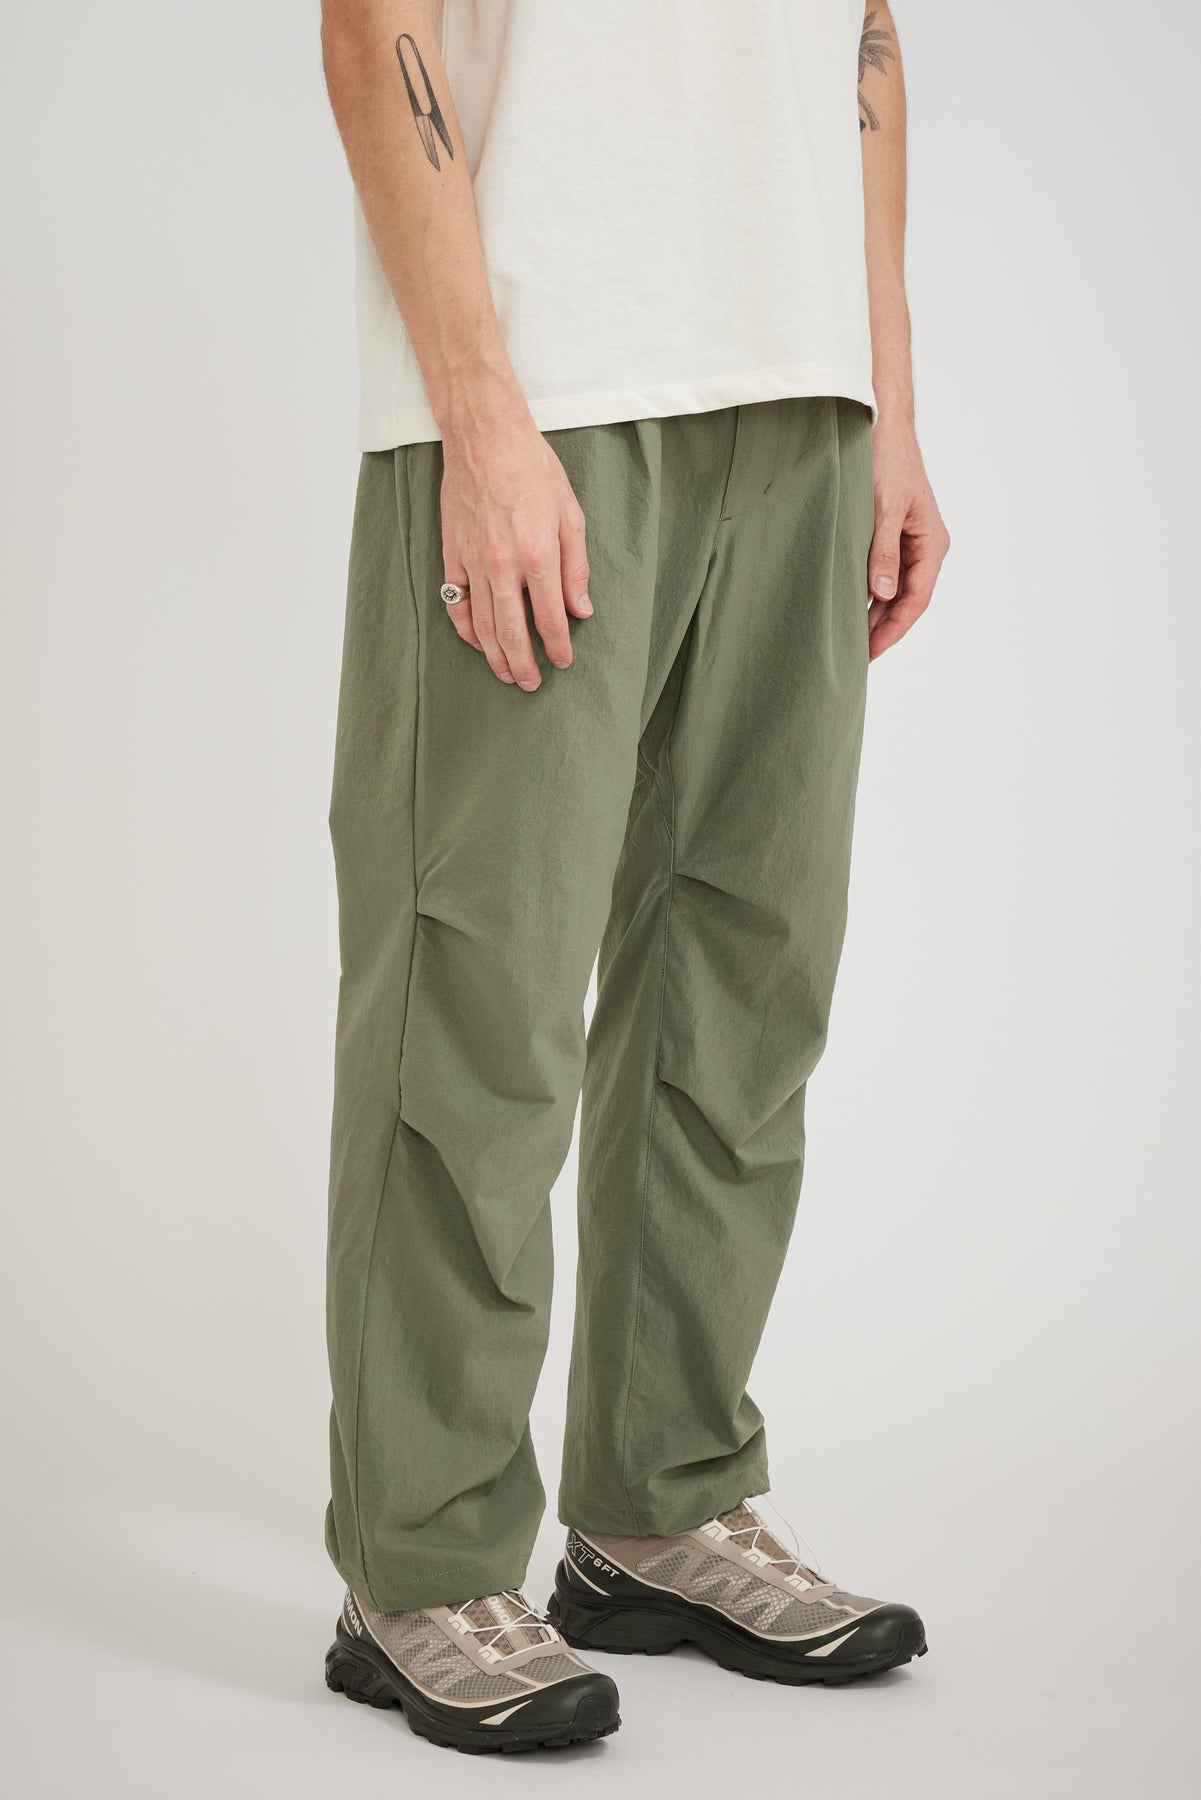 NANGA Air Cloth Comfy Pants Olive Drab | Maplestore